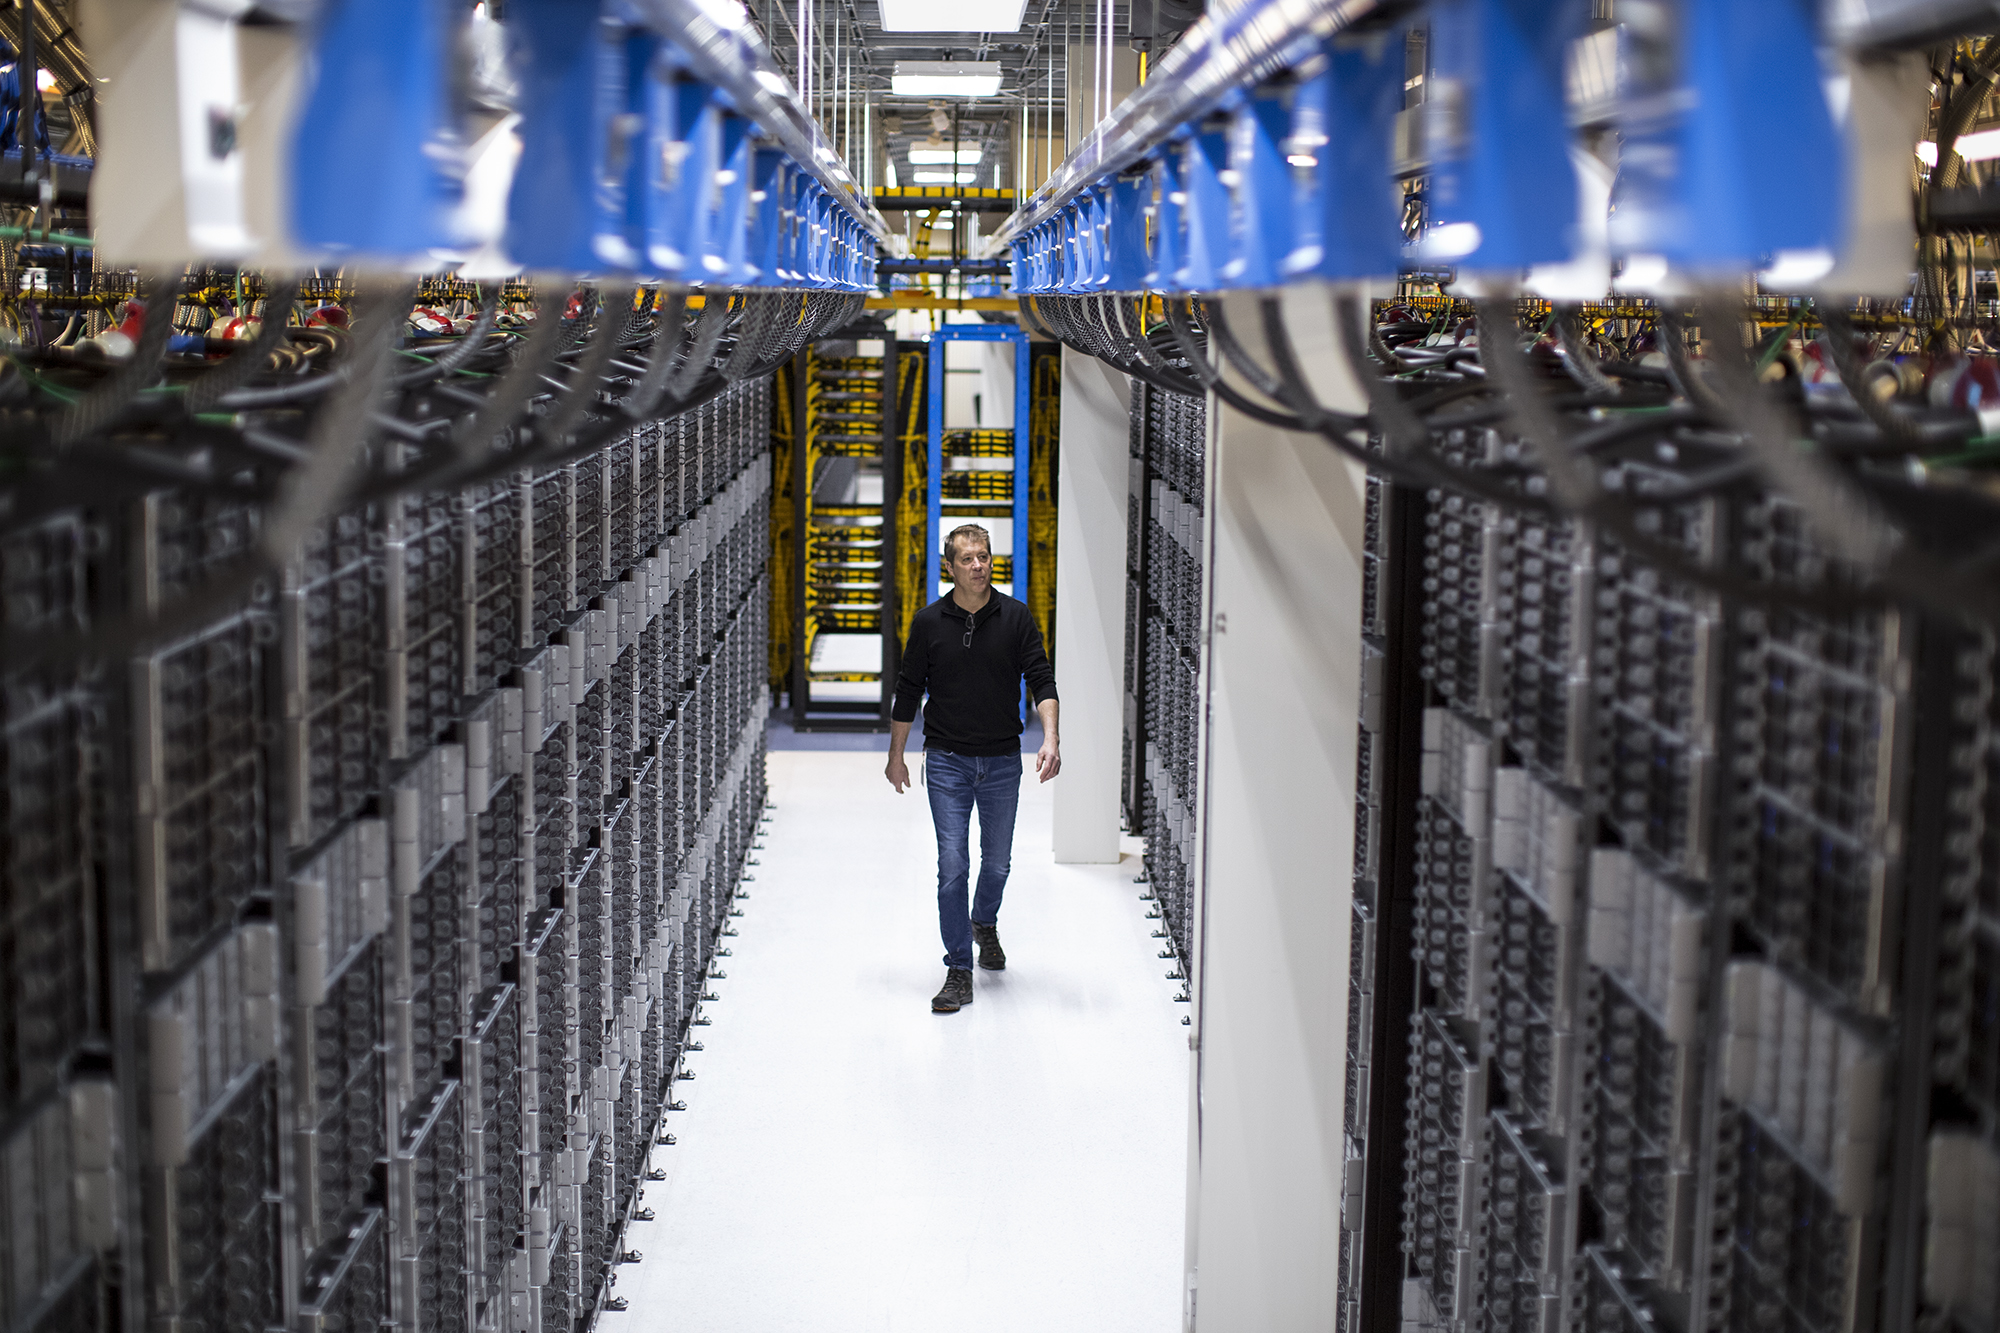 Man walking between racks of servers in data centre